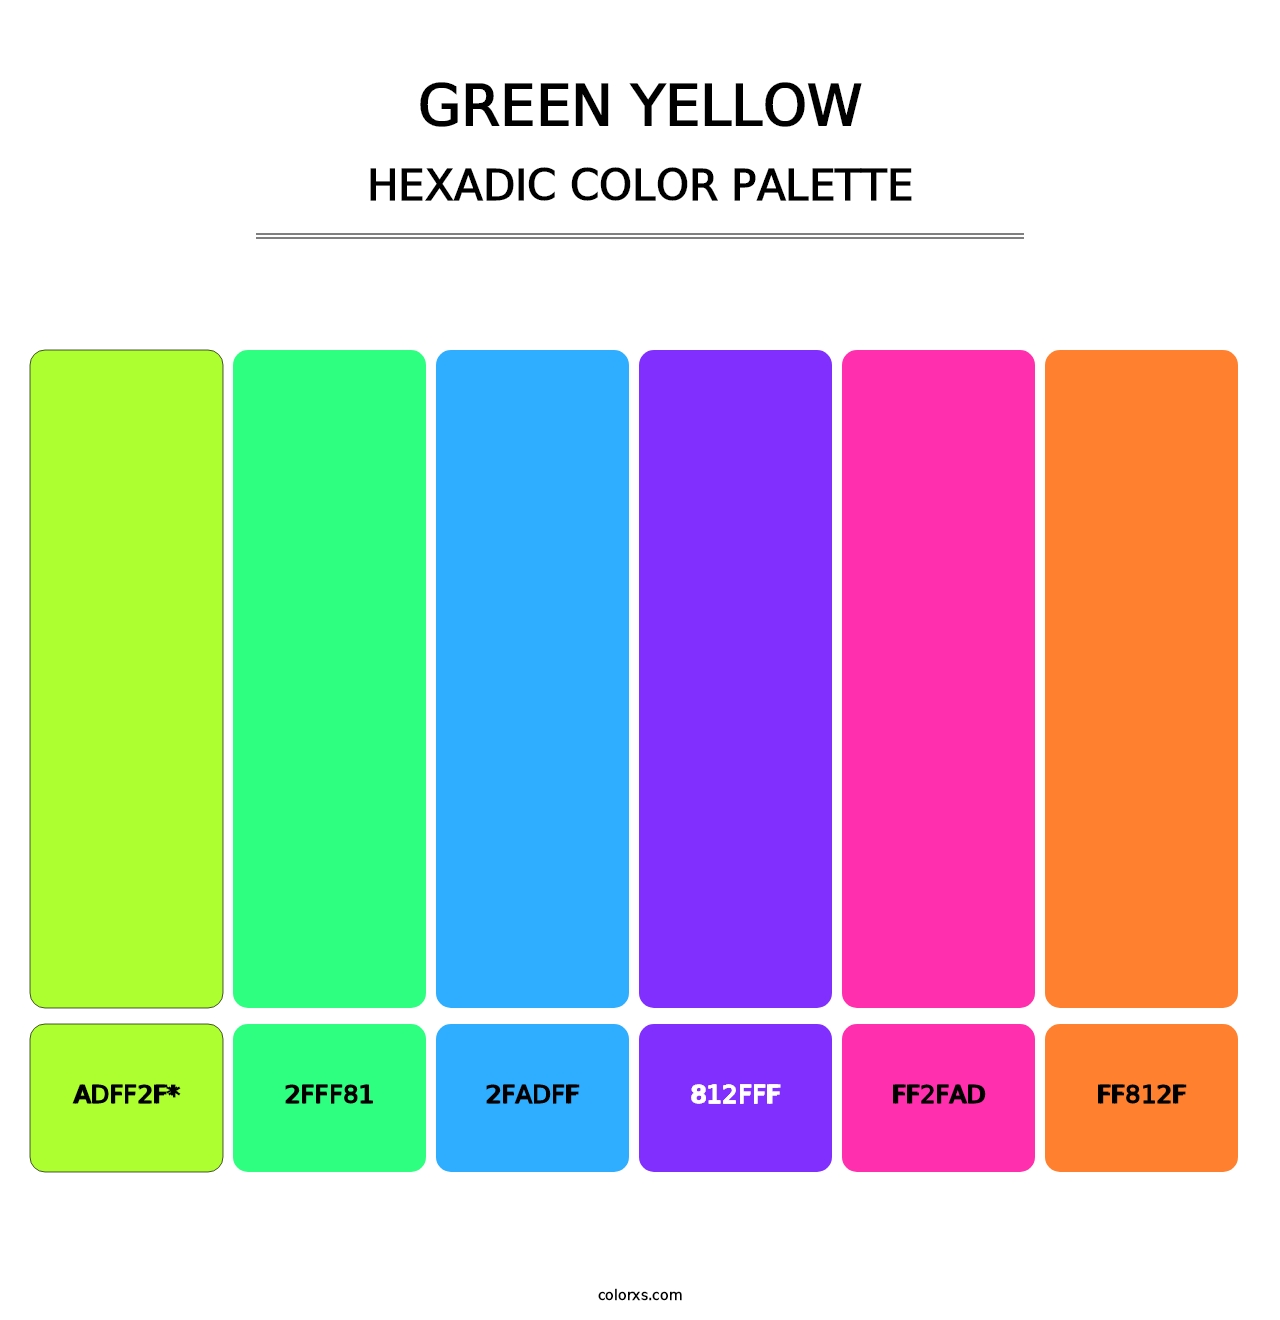 Green Yellow - Hexadic Color Palette